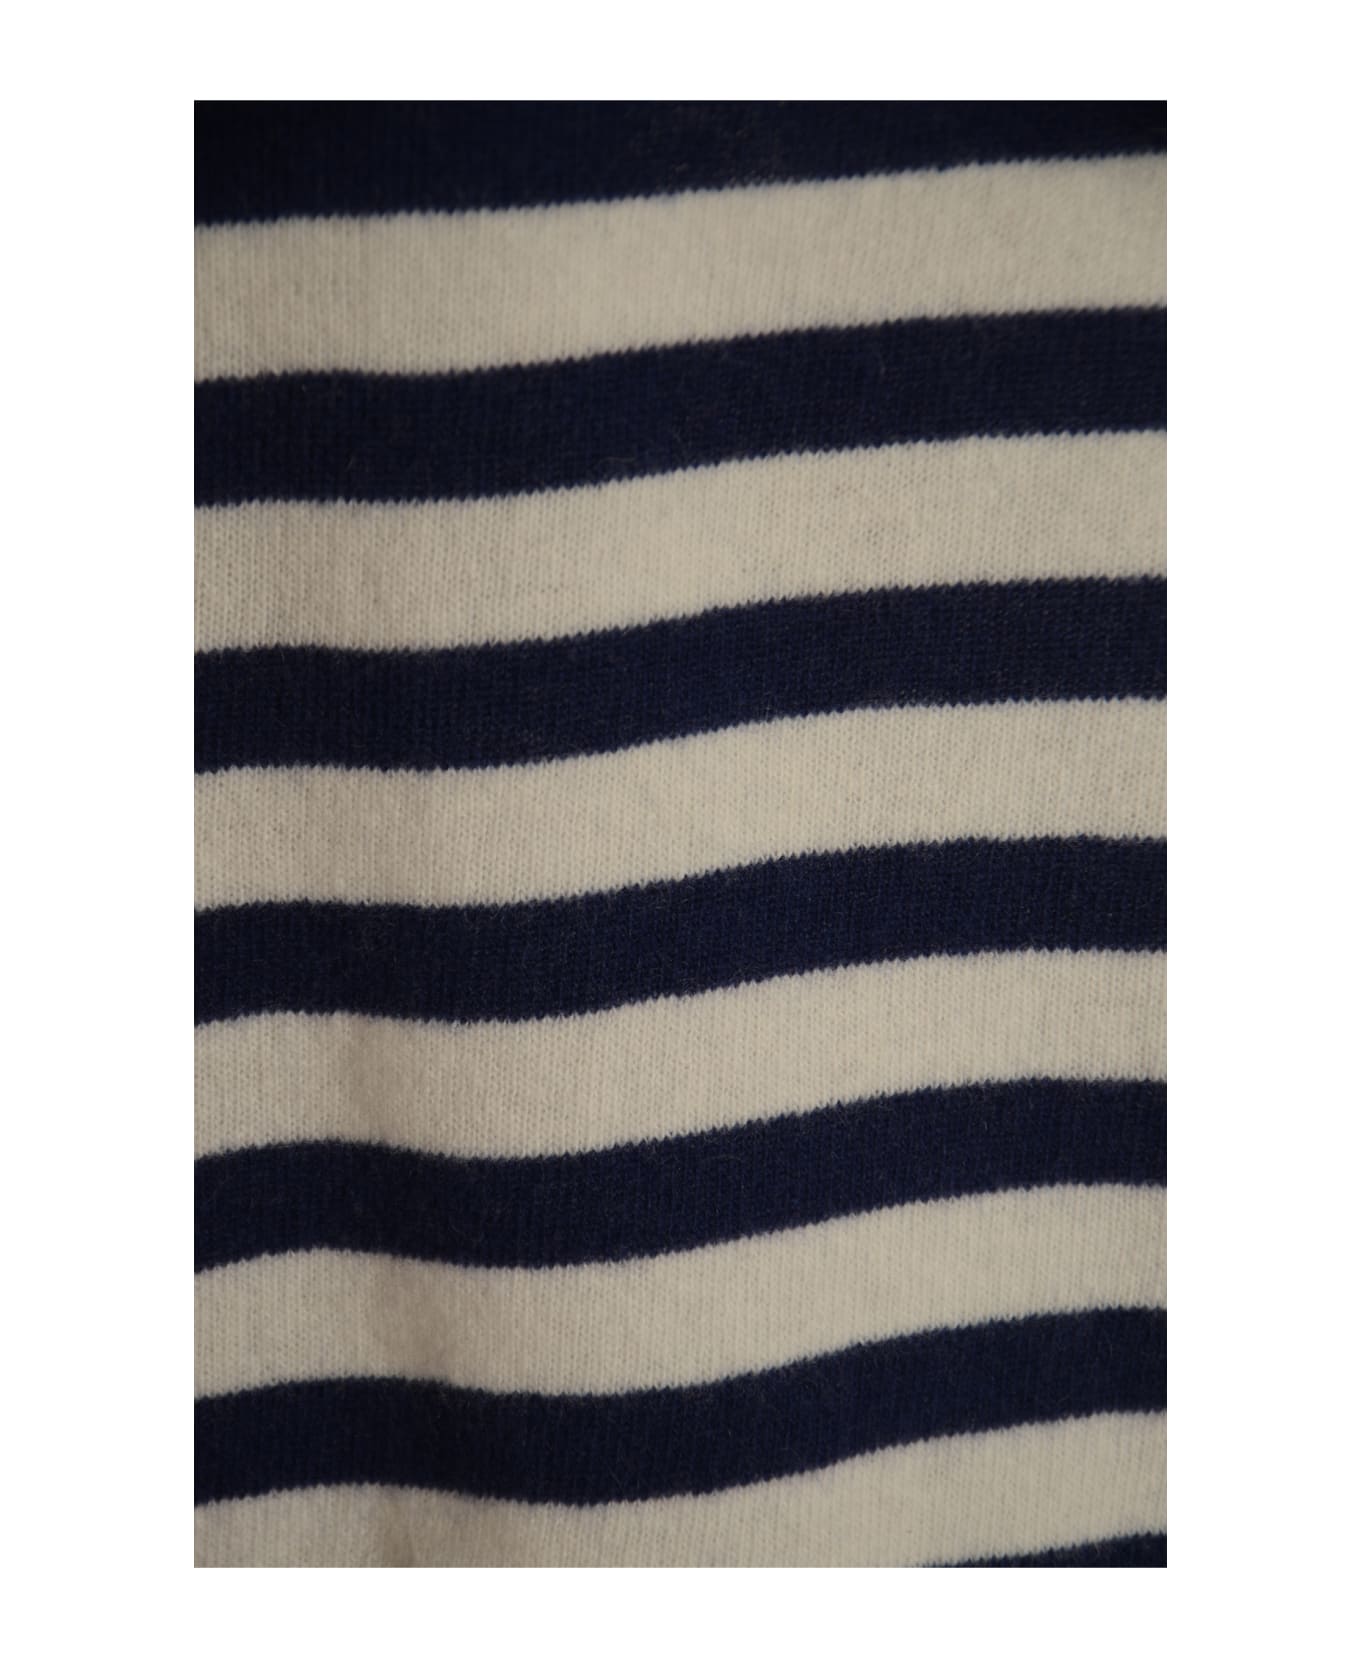 Philosophy di Lorenzo Serafini Logo Embroidered Stripe Sweater - Blue